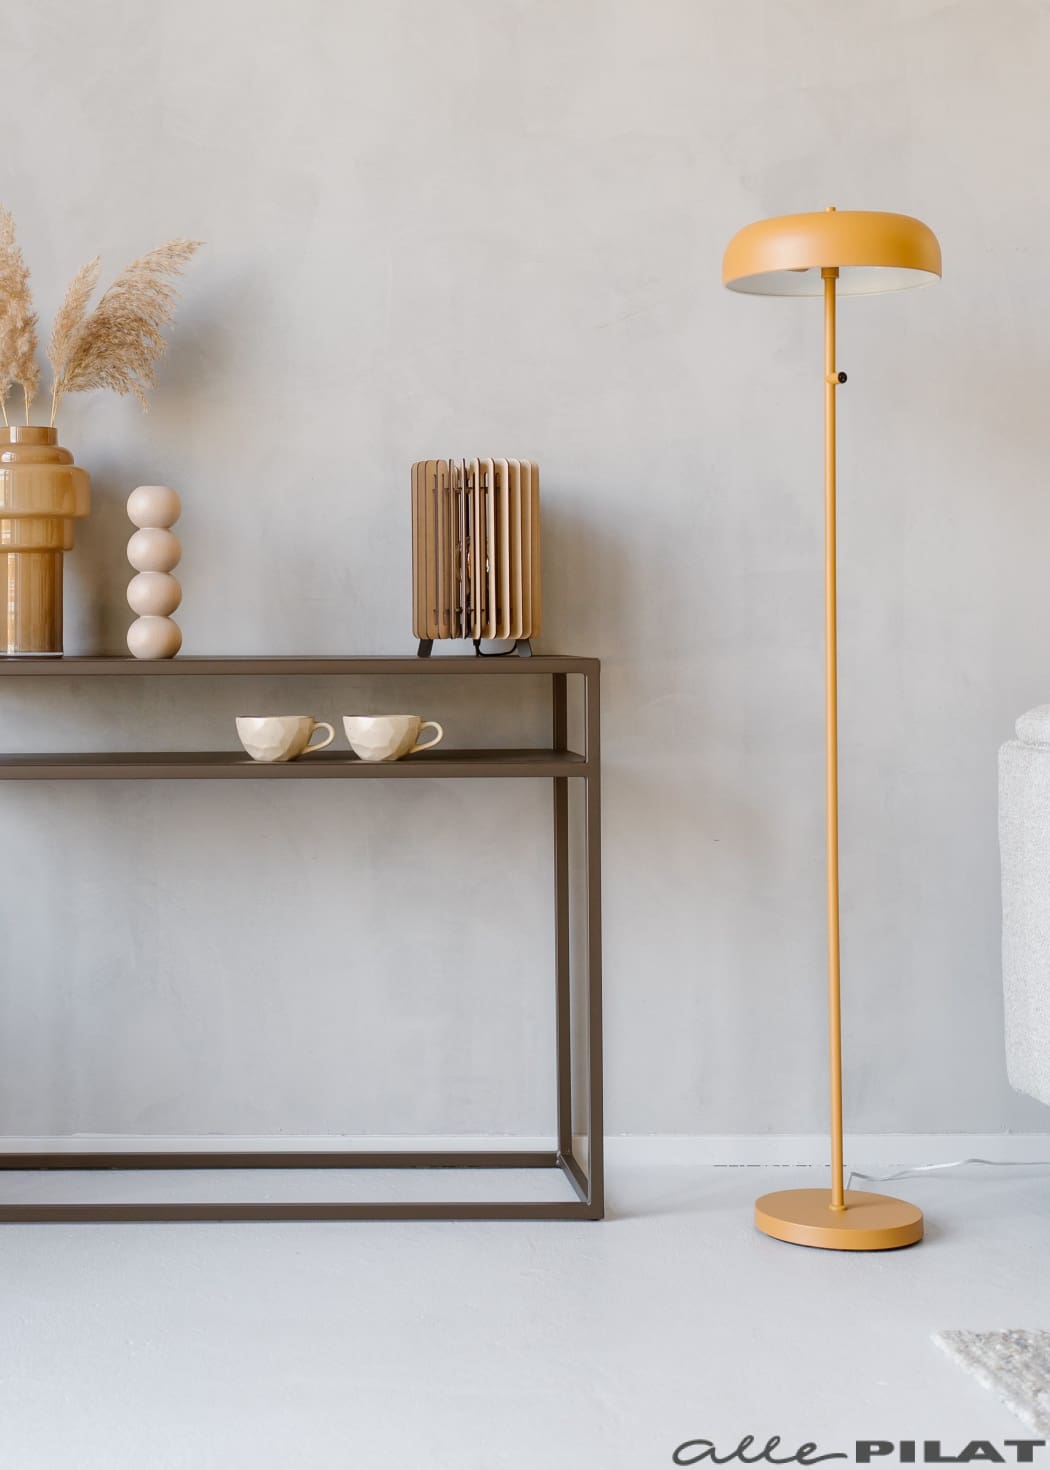 Vloerlamp Porto met minimalistisch design